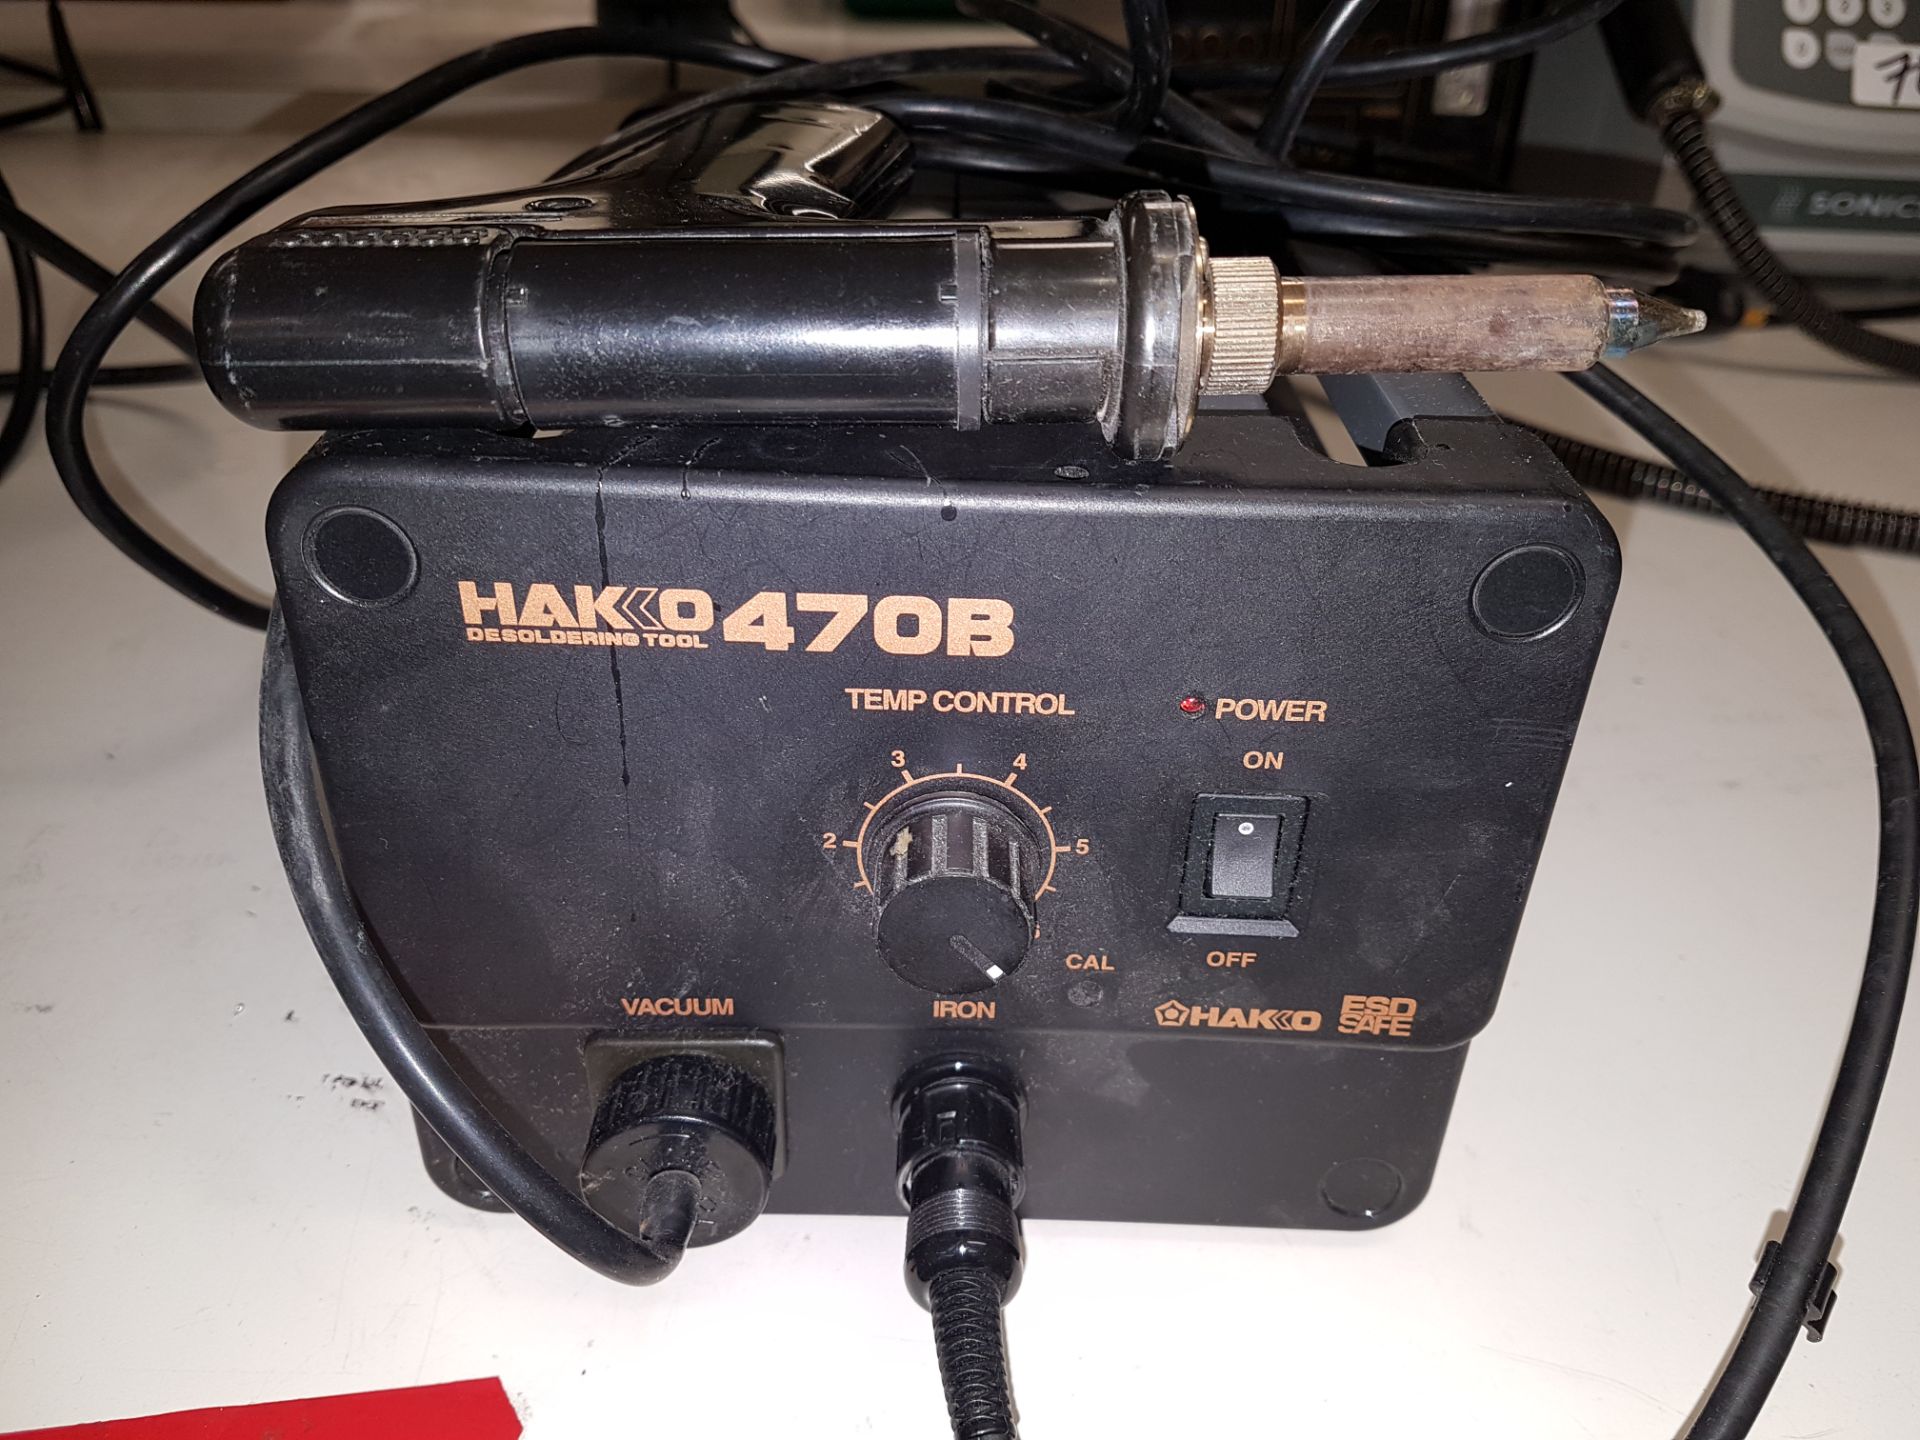 Hakko "470B" Desoldering Tool - Image 2 of 3